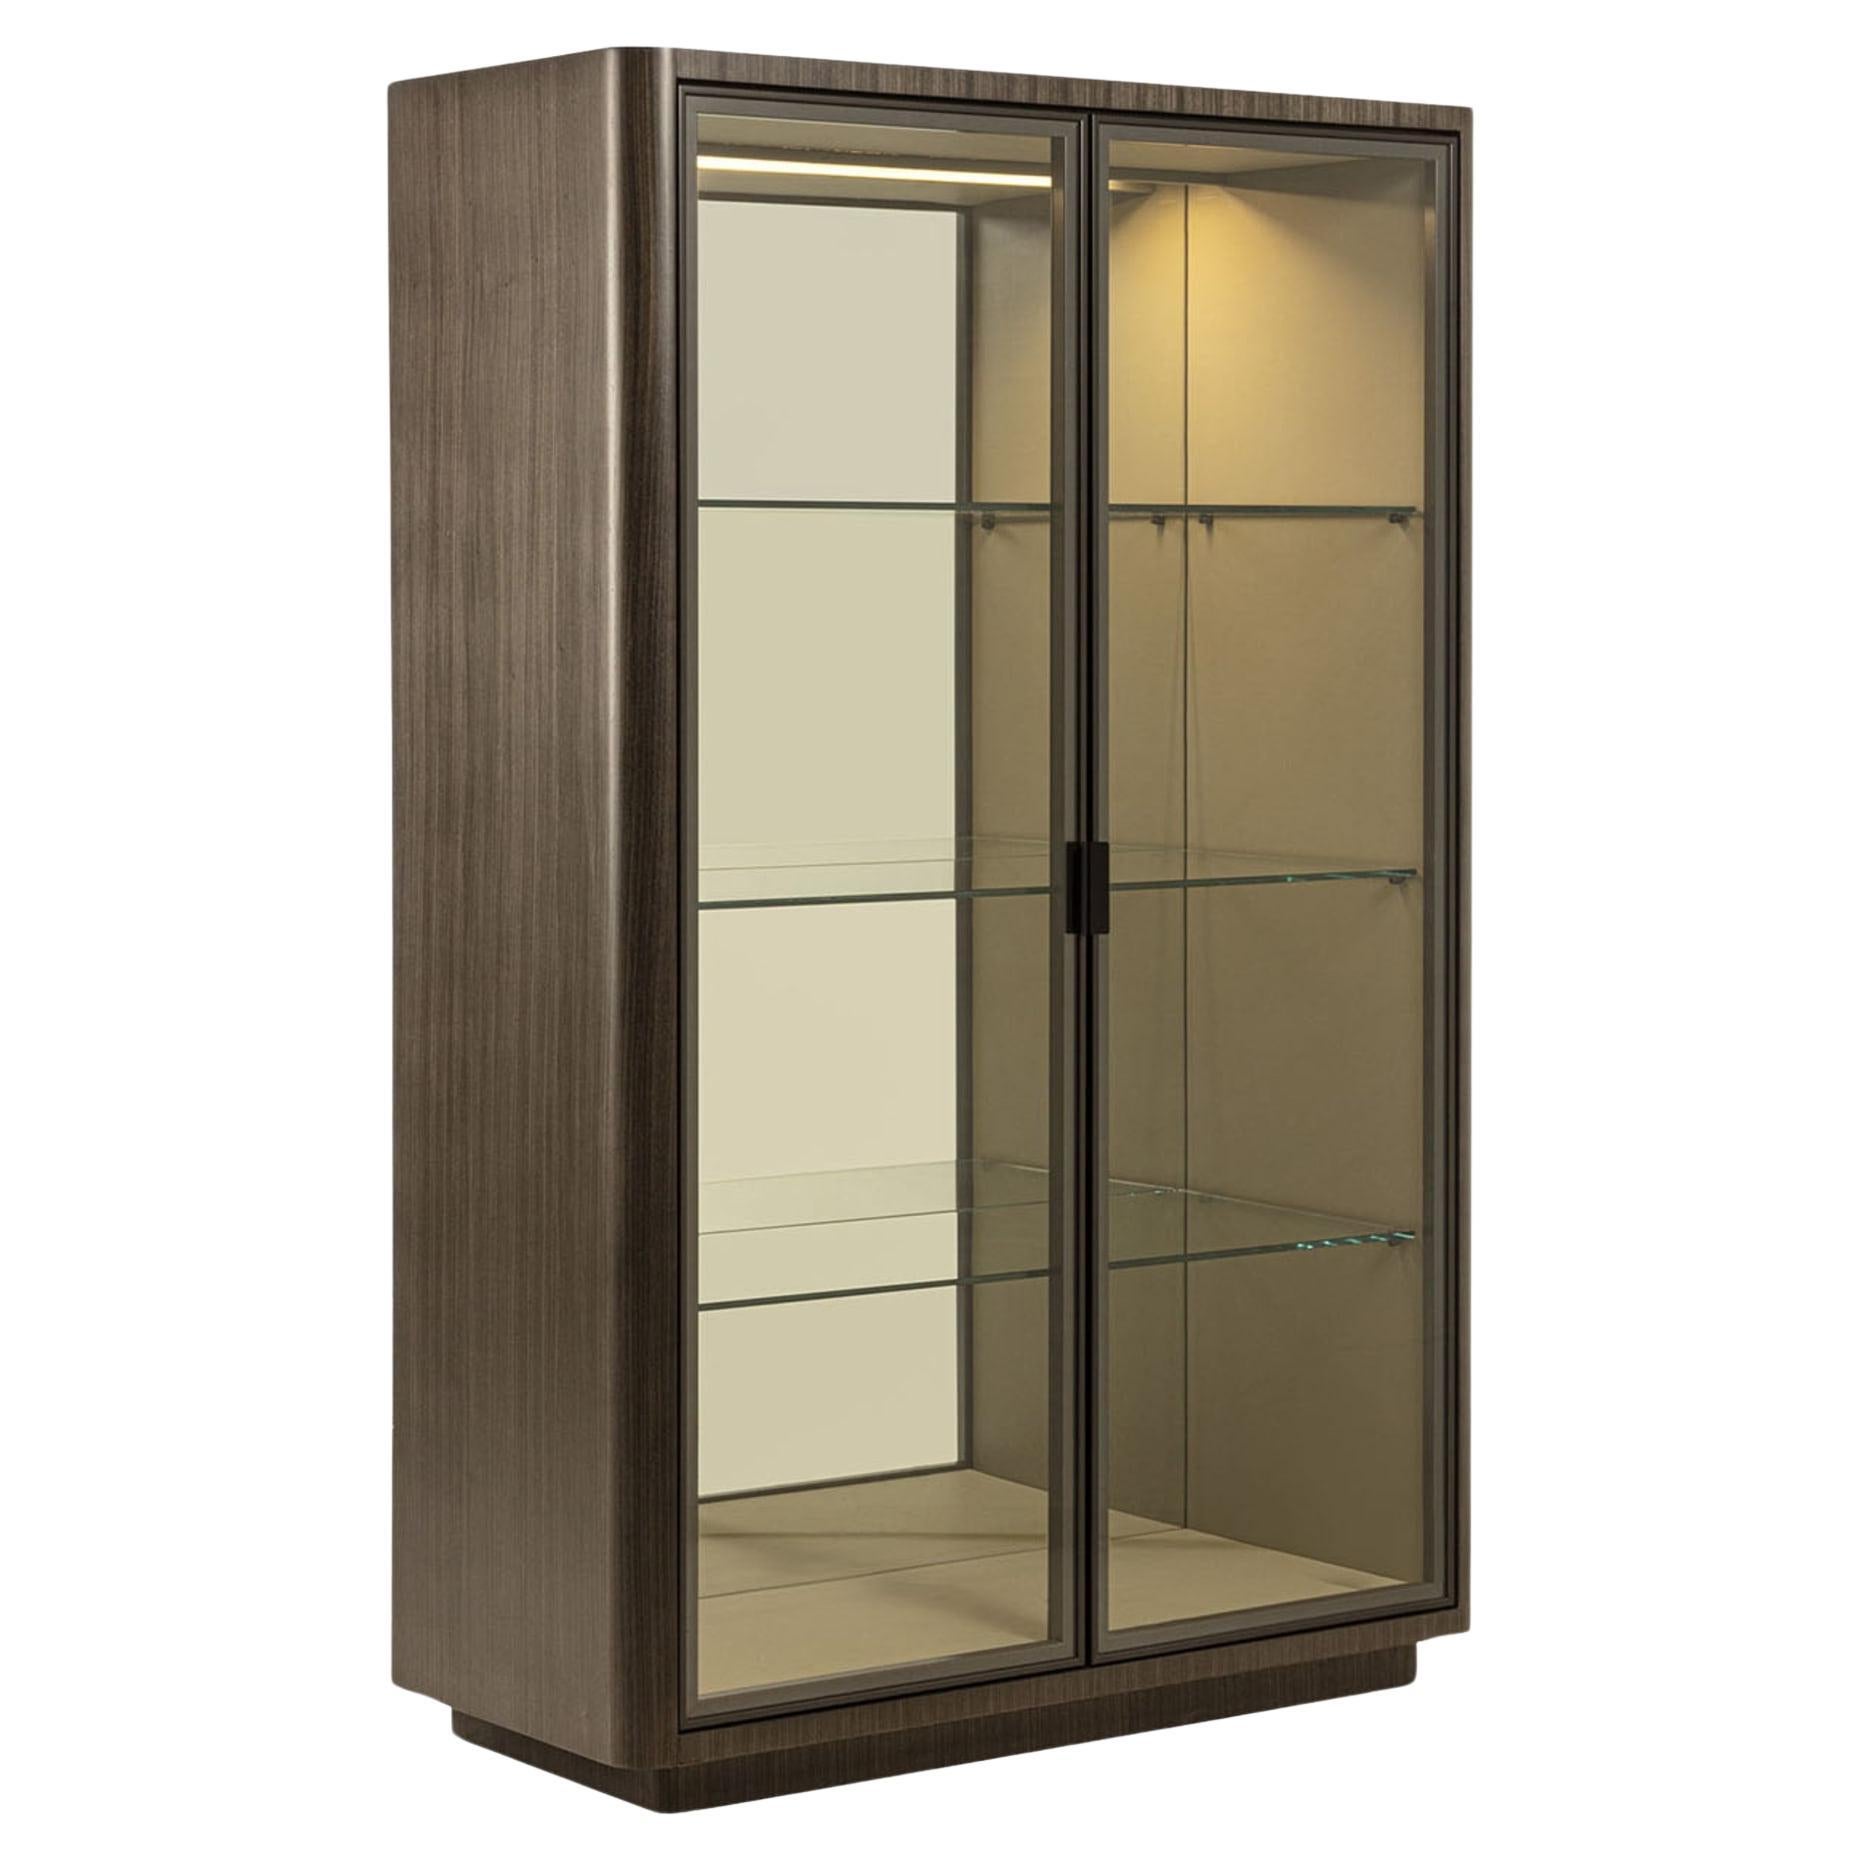 Dafne Glass Cabinet